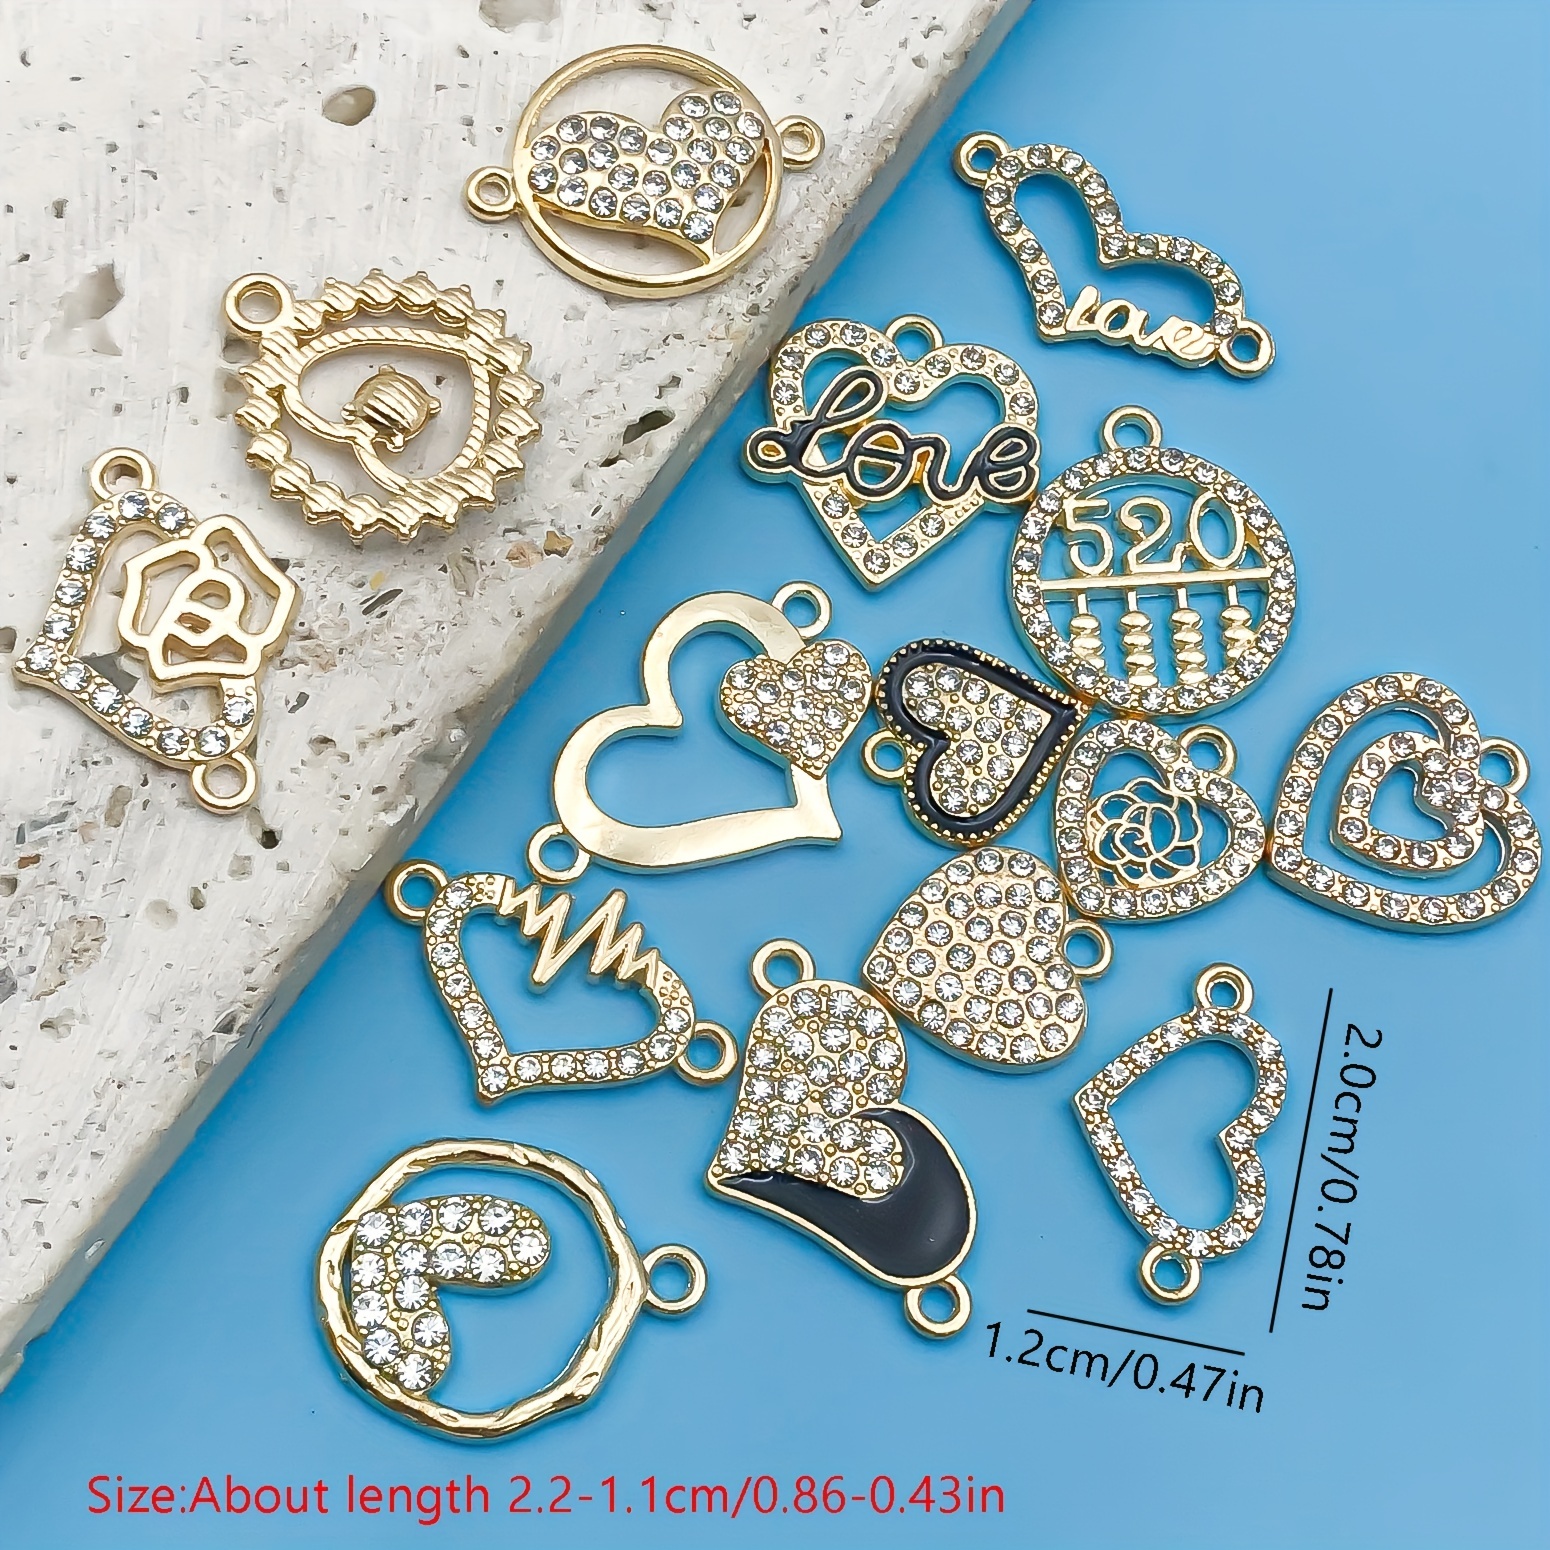 20pcs/lot Random Color Zinc Alloy Enamel Gold Plated Cute Heart Shape  Charms Pendant For DIY Necklace Bracelets Earrings Jewelry Making DIY  Materials